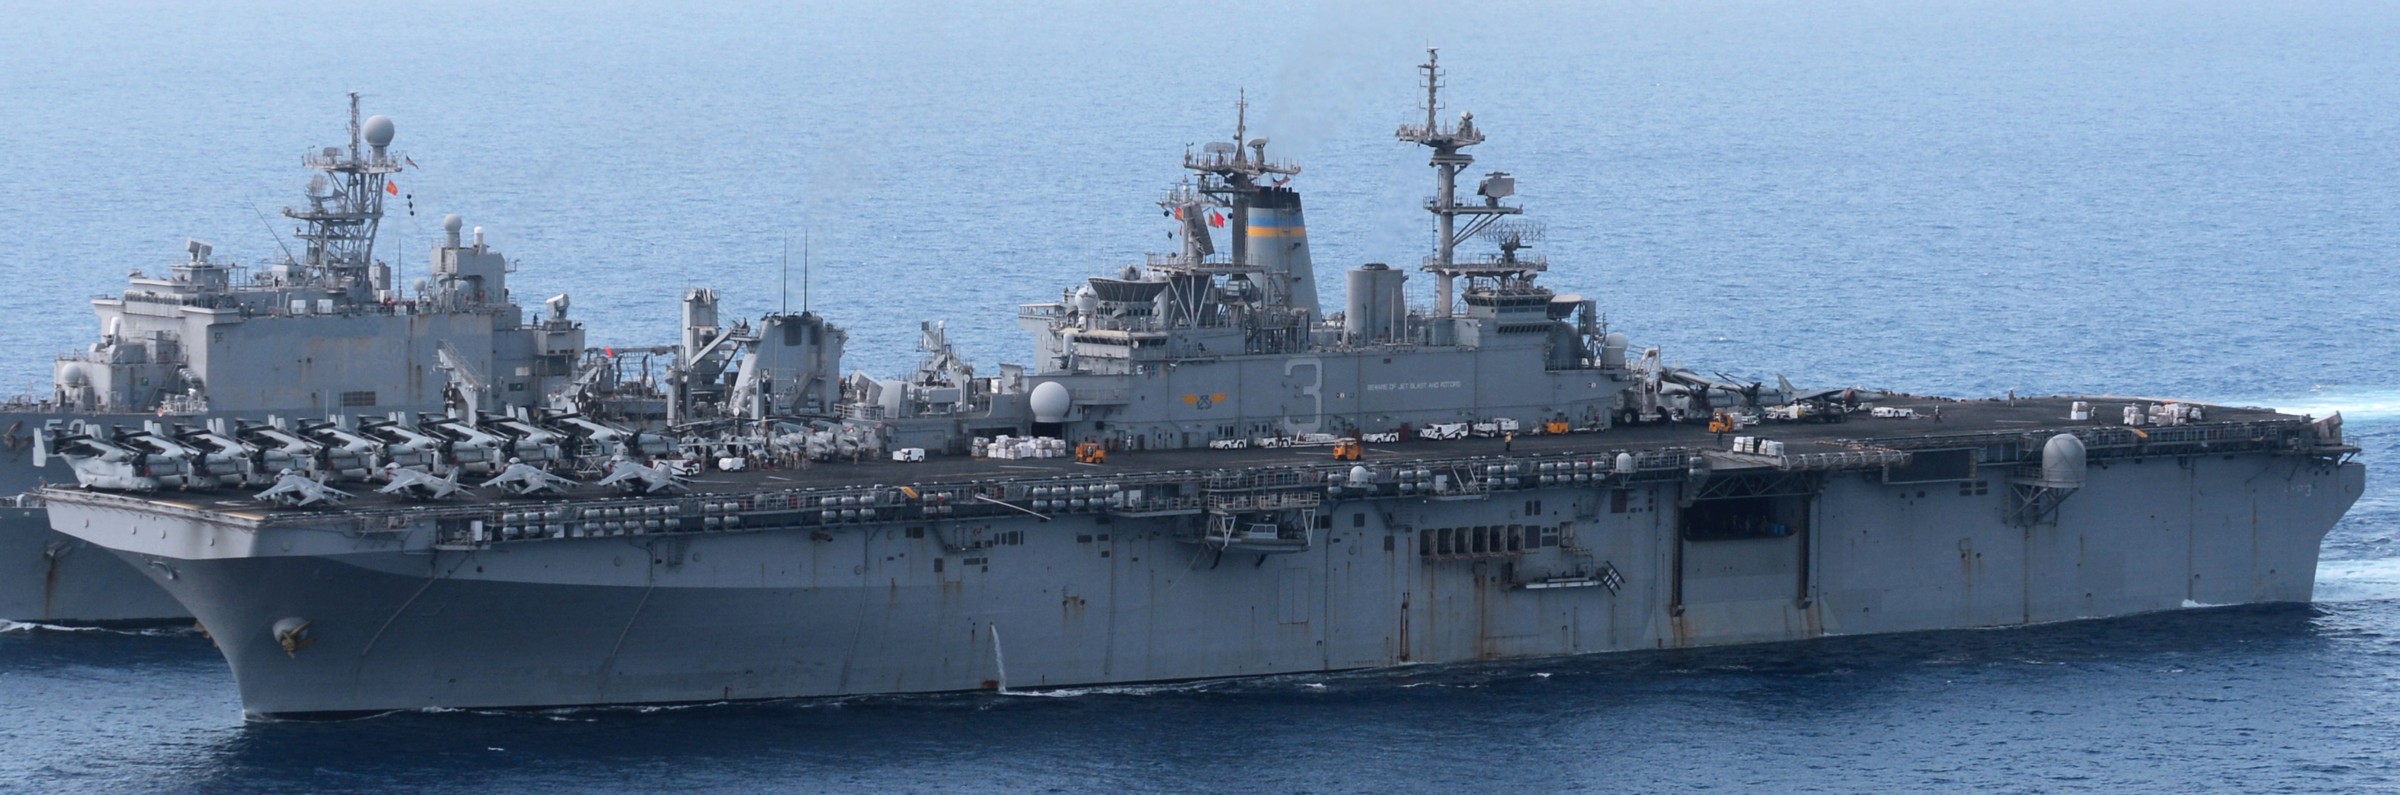 lhd-3 uss kearsarge wasp class amphibious assault ship us navy marines vmm-266 106